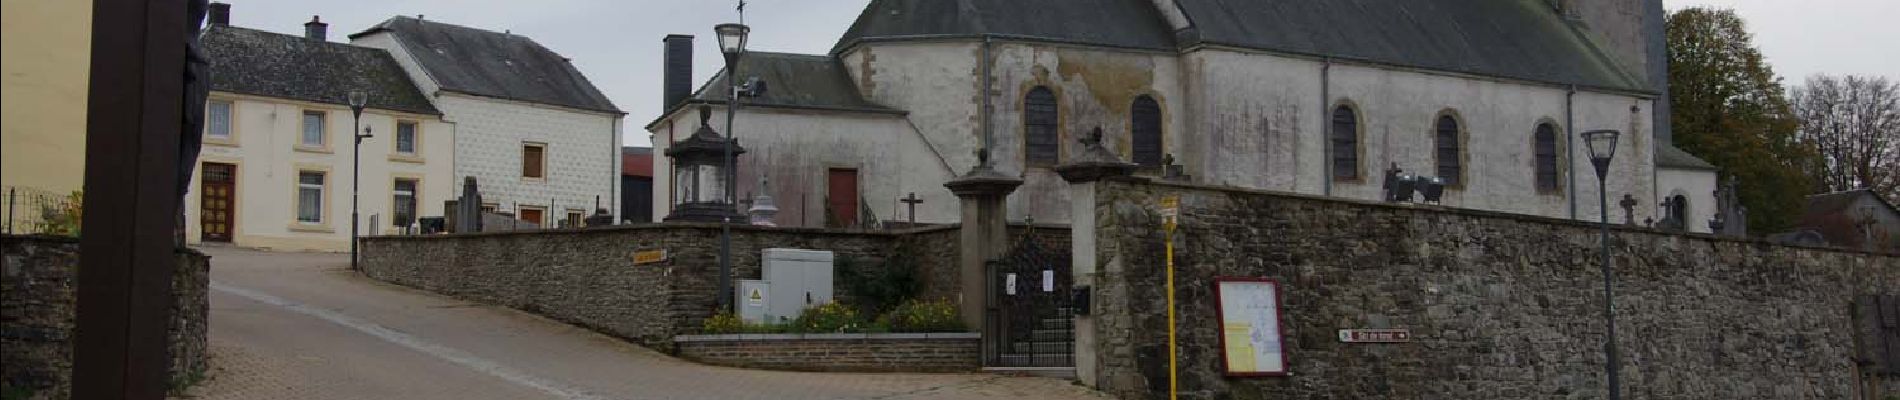 Point d'intérêt Habay - GG-Lu-14-3_Eglise d'Anlier - Photo